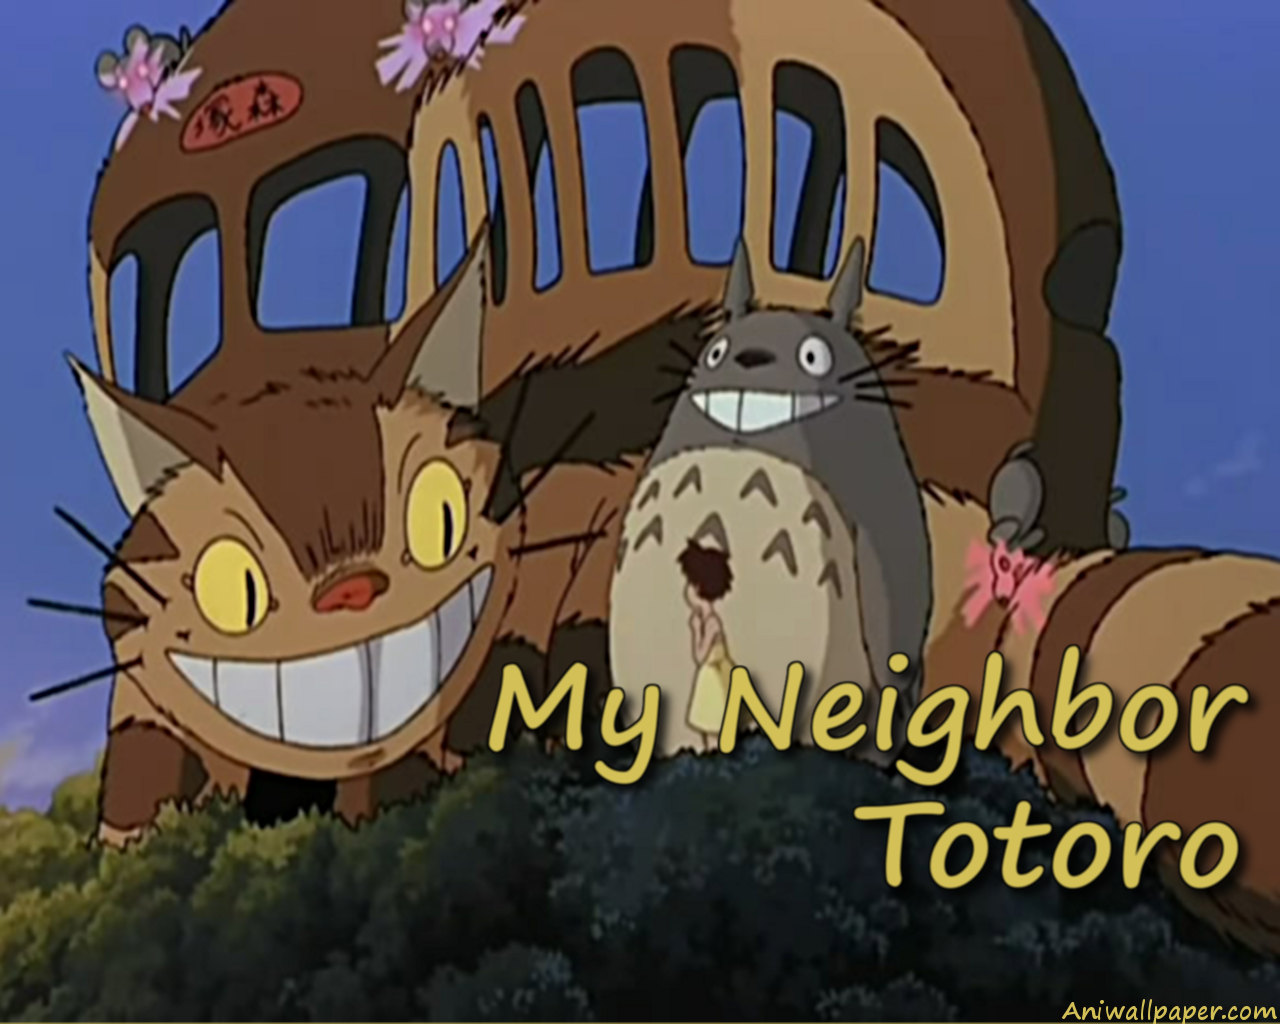 HD Neighbor Totoro 3d Wallpaper